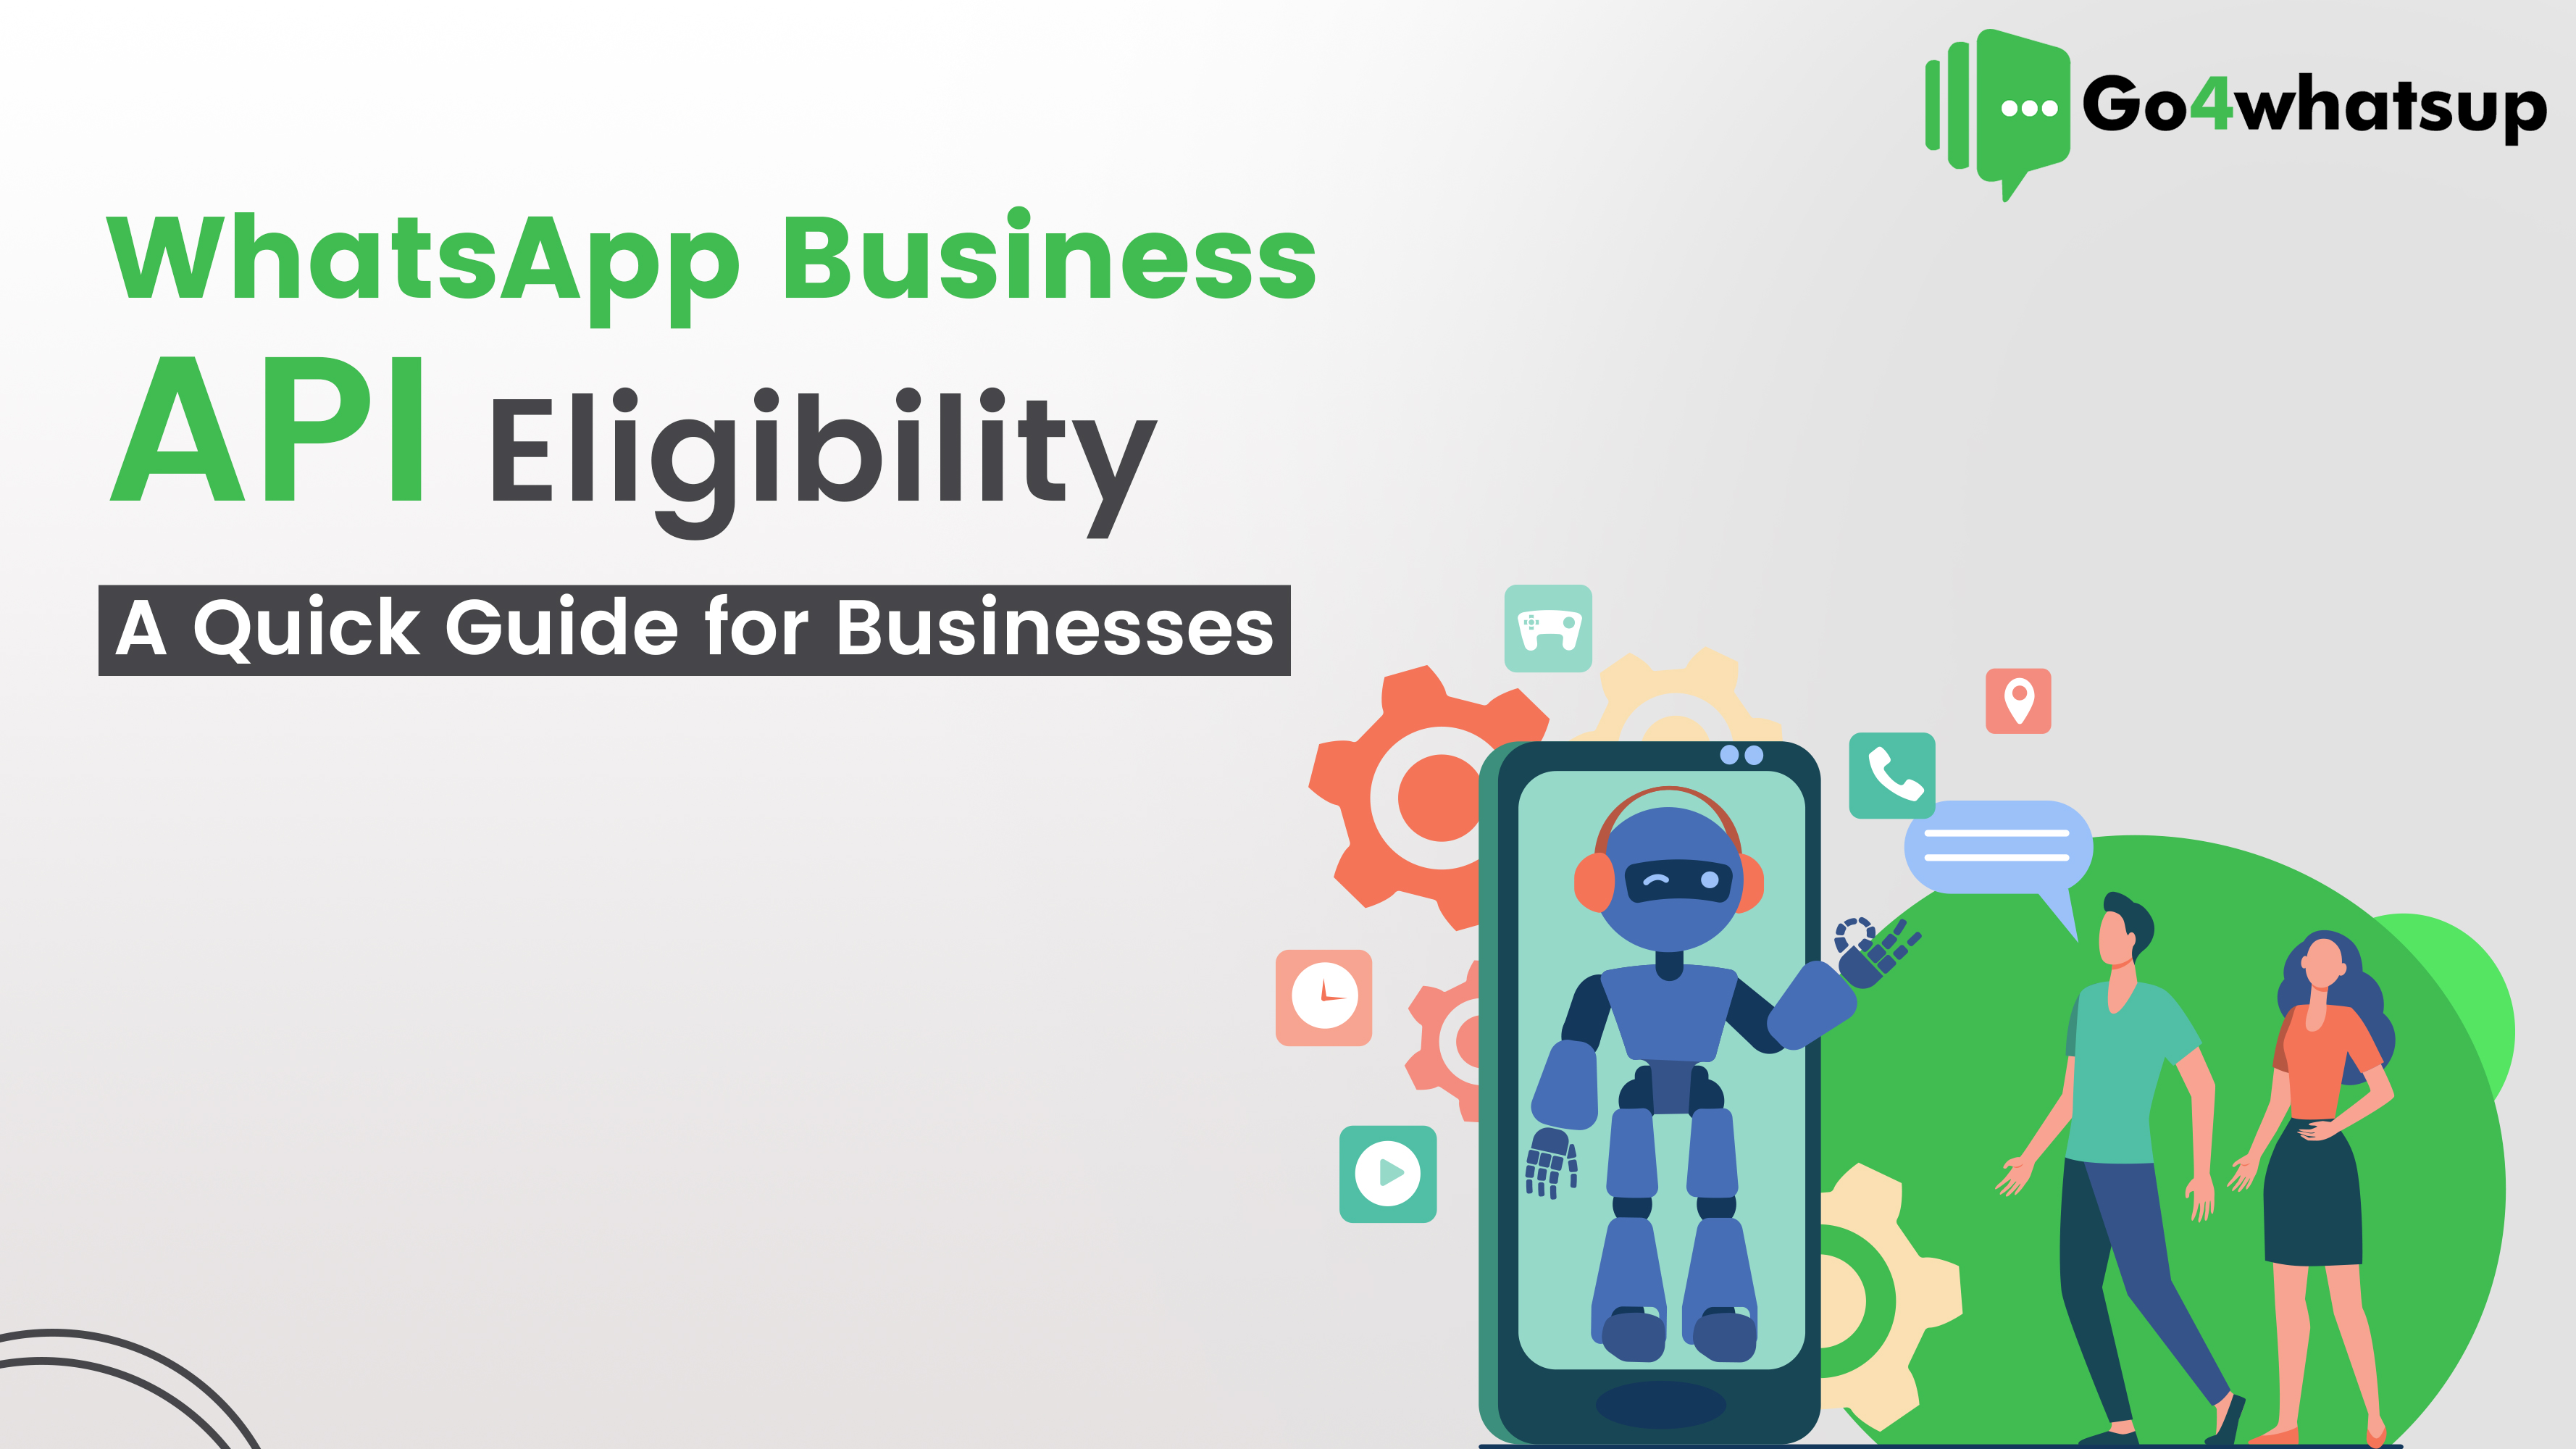 WhatsApp Business API Eligibility: Essential Guide for Businesses